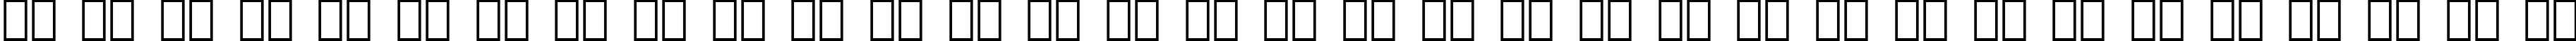 Пример написания русского алфавита шрифтом Square 721 Extended BT